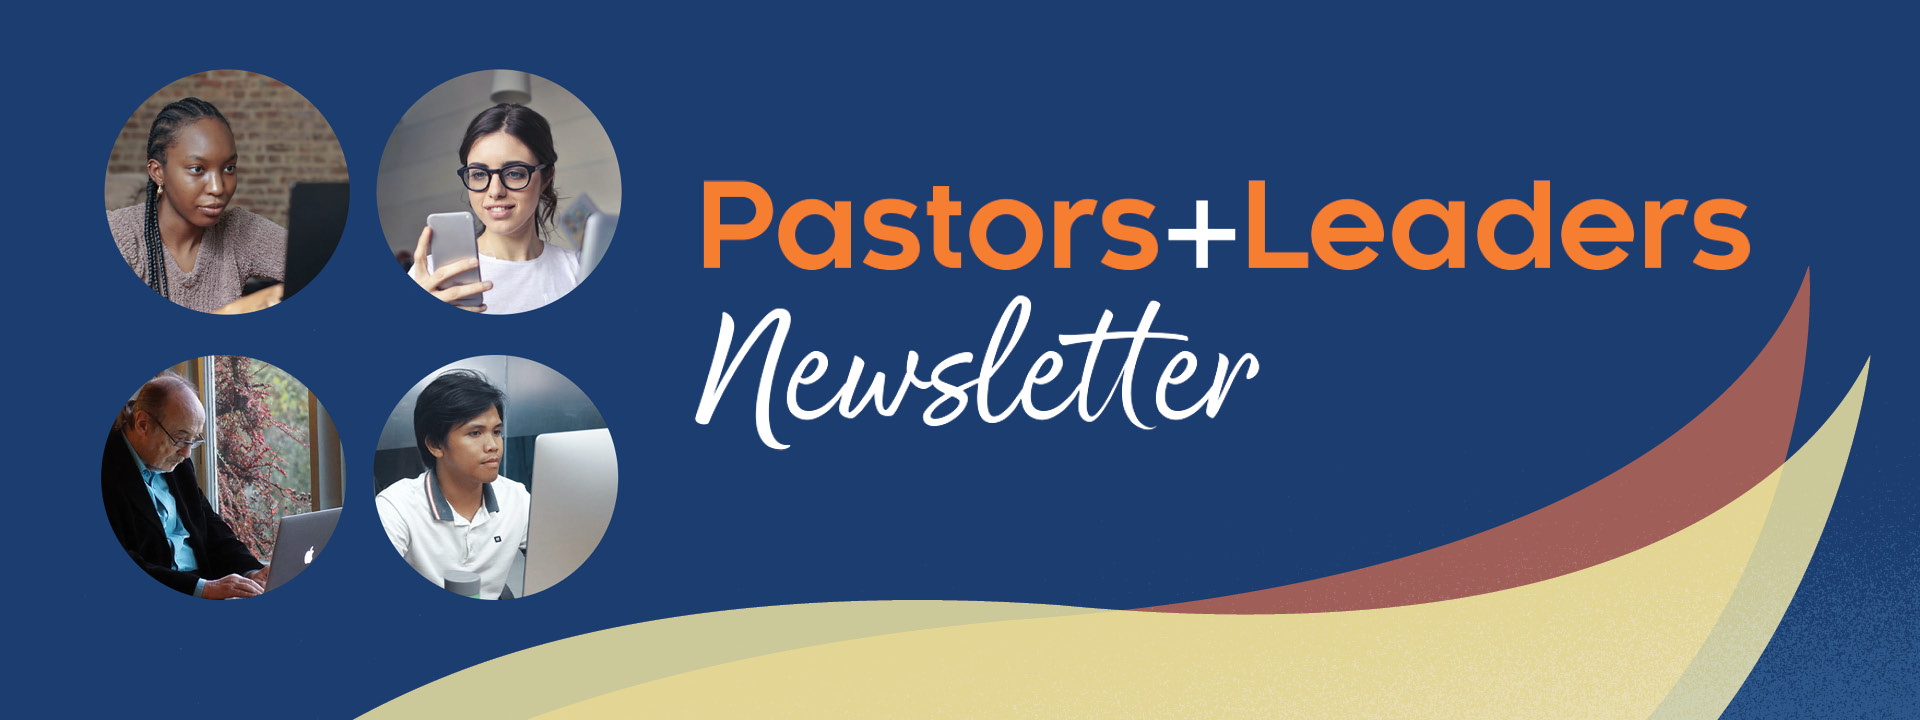 Pastors + Leaders Newsletter